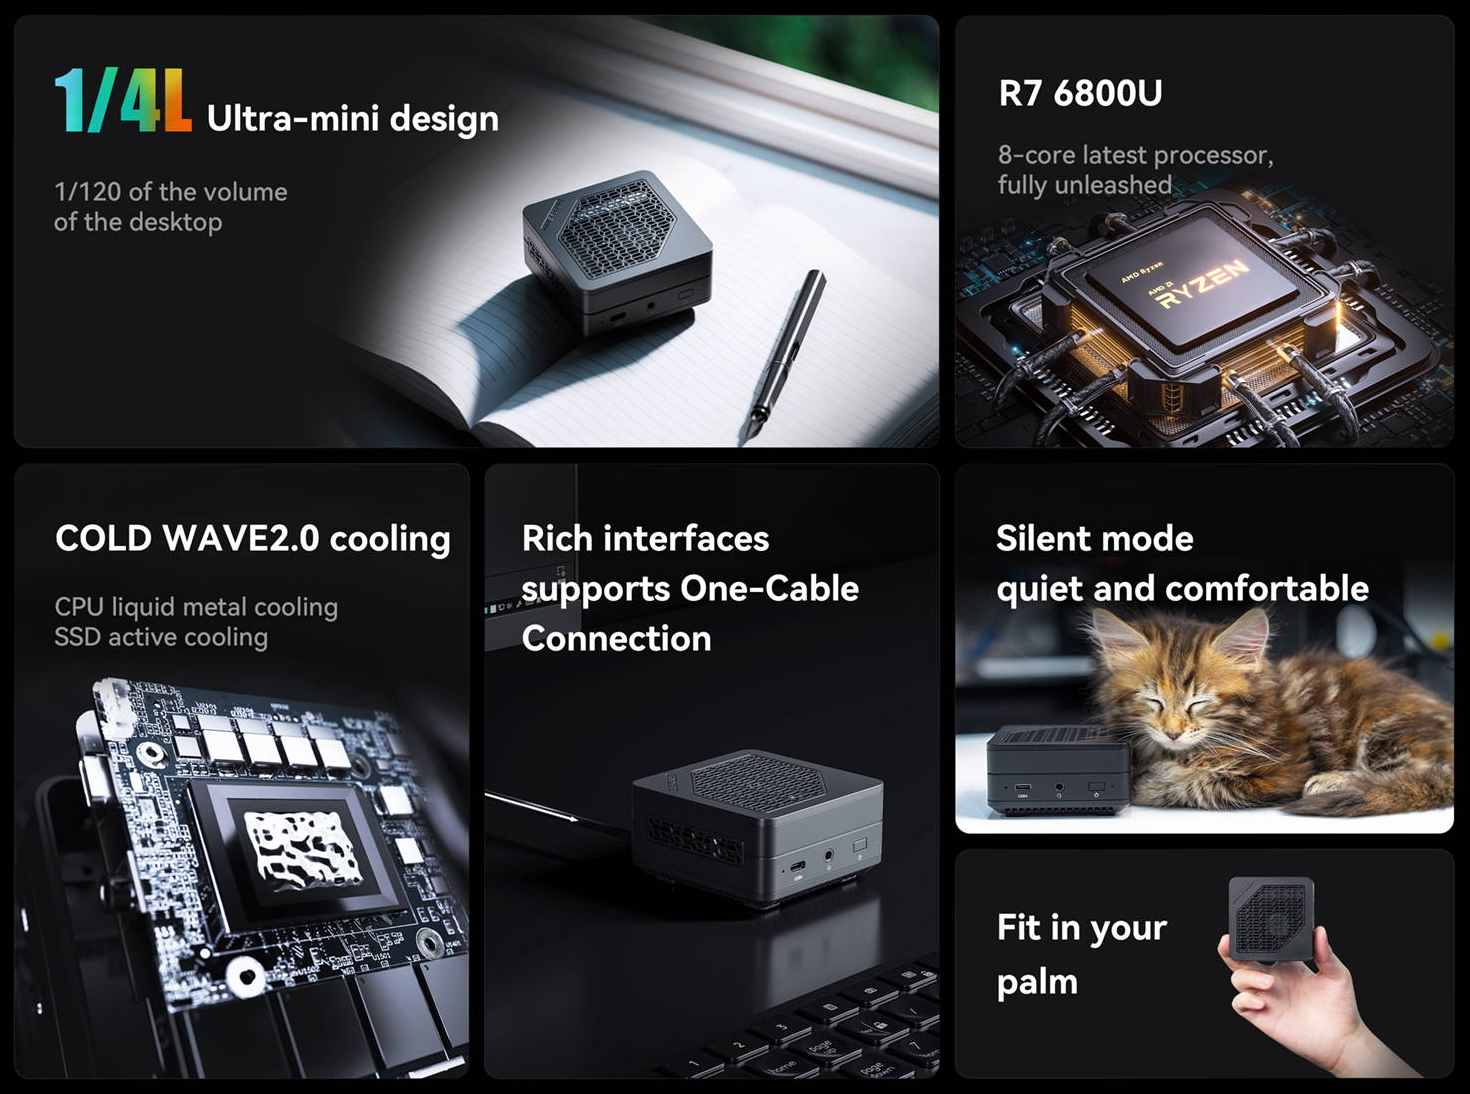 Minisforum UM790 Pro Review: Small But Very Powerful Mini PC